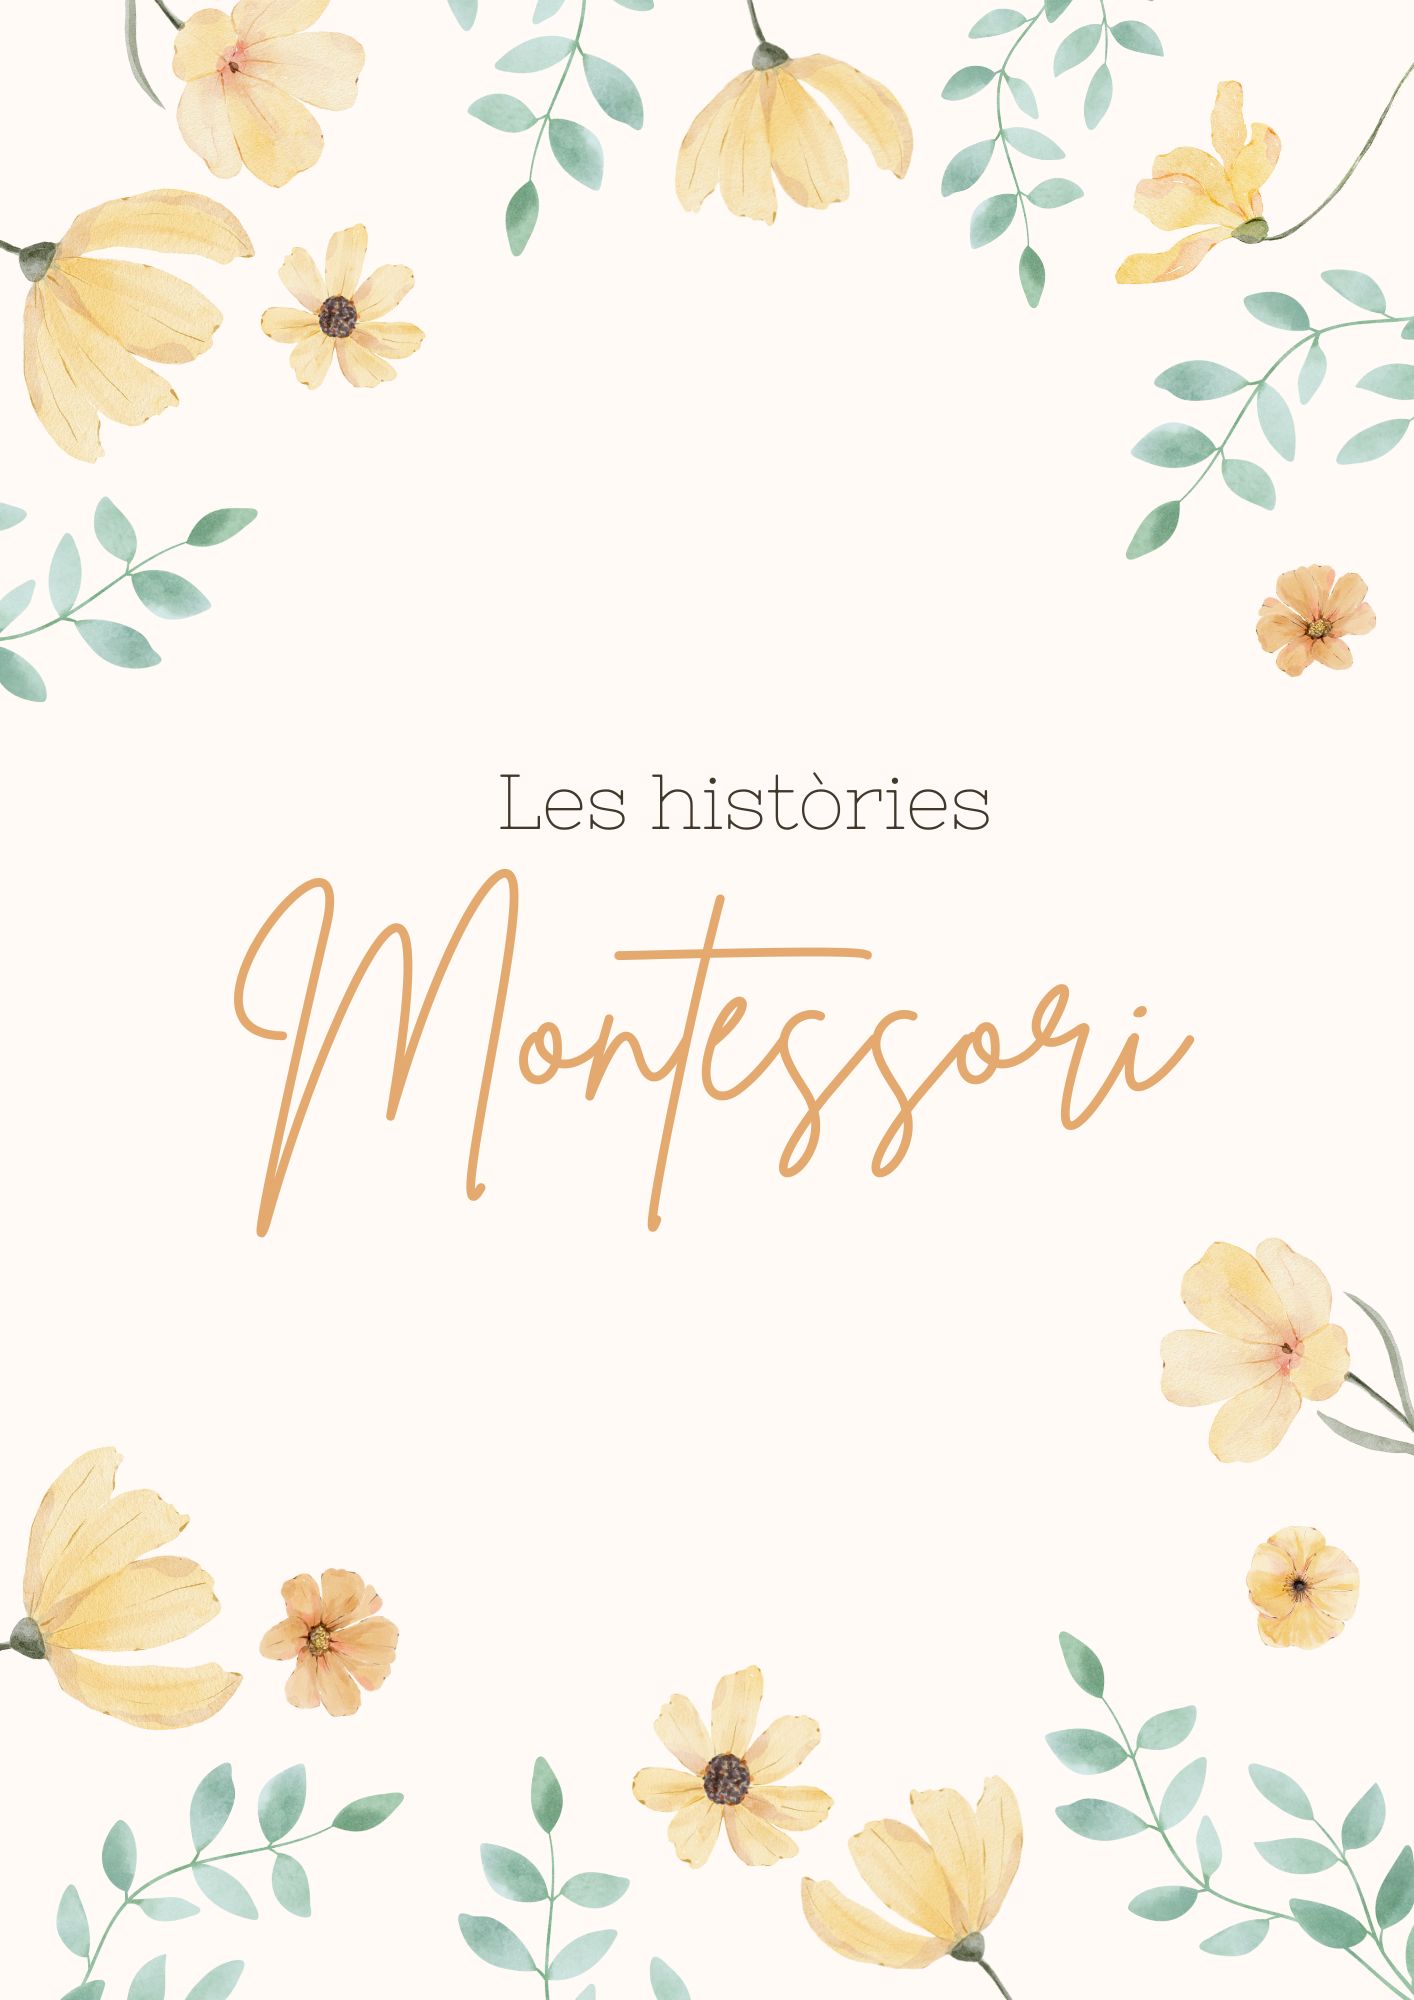 Les històries Montessori